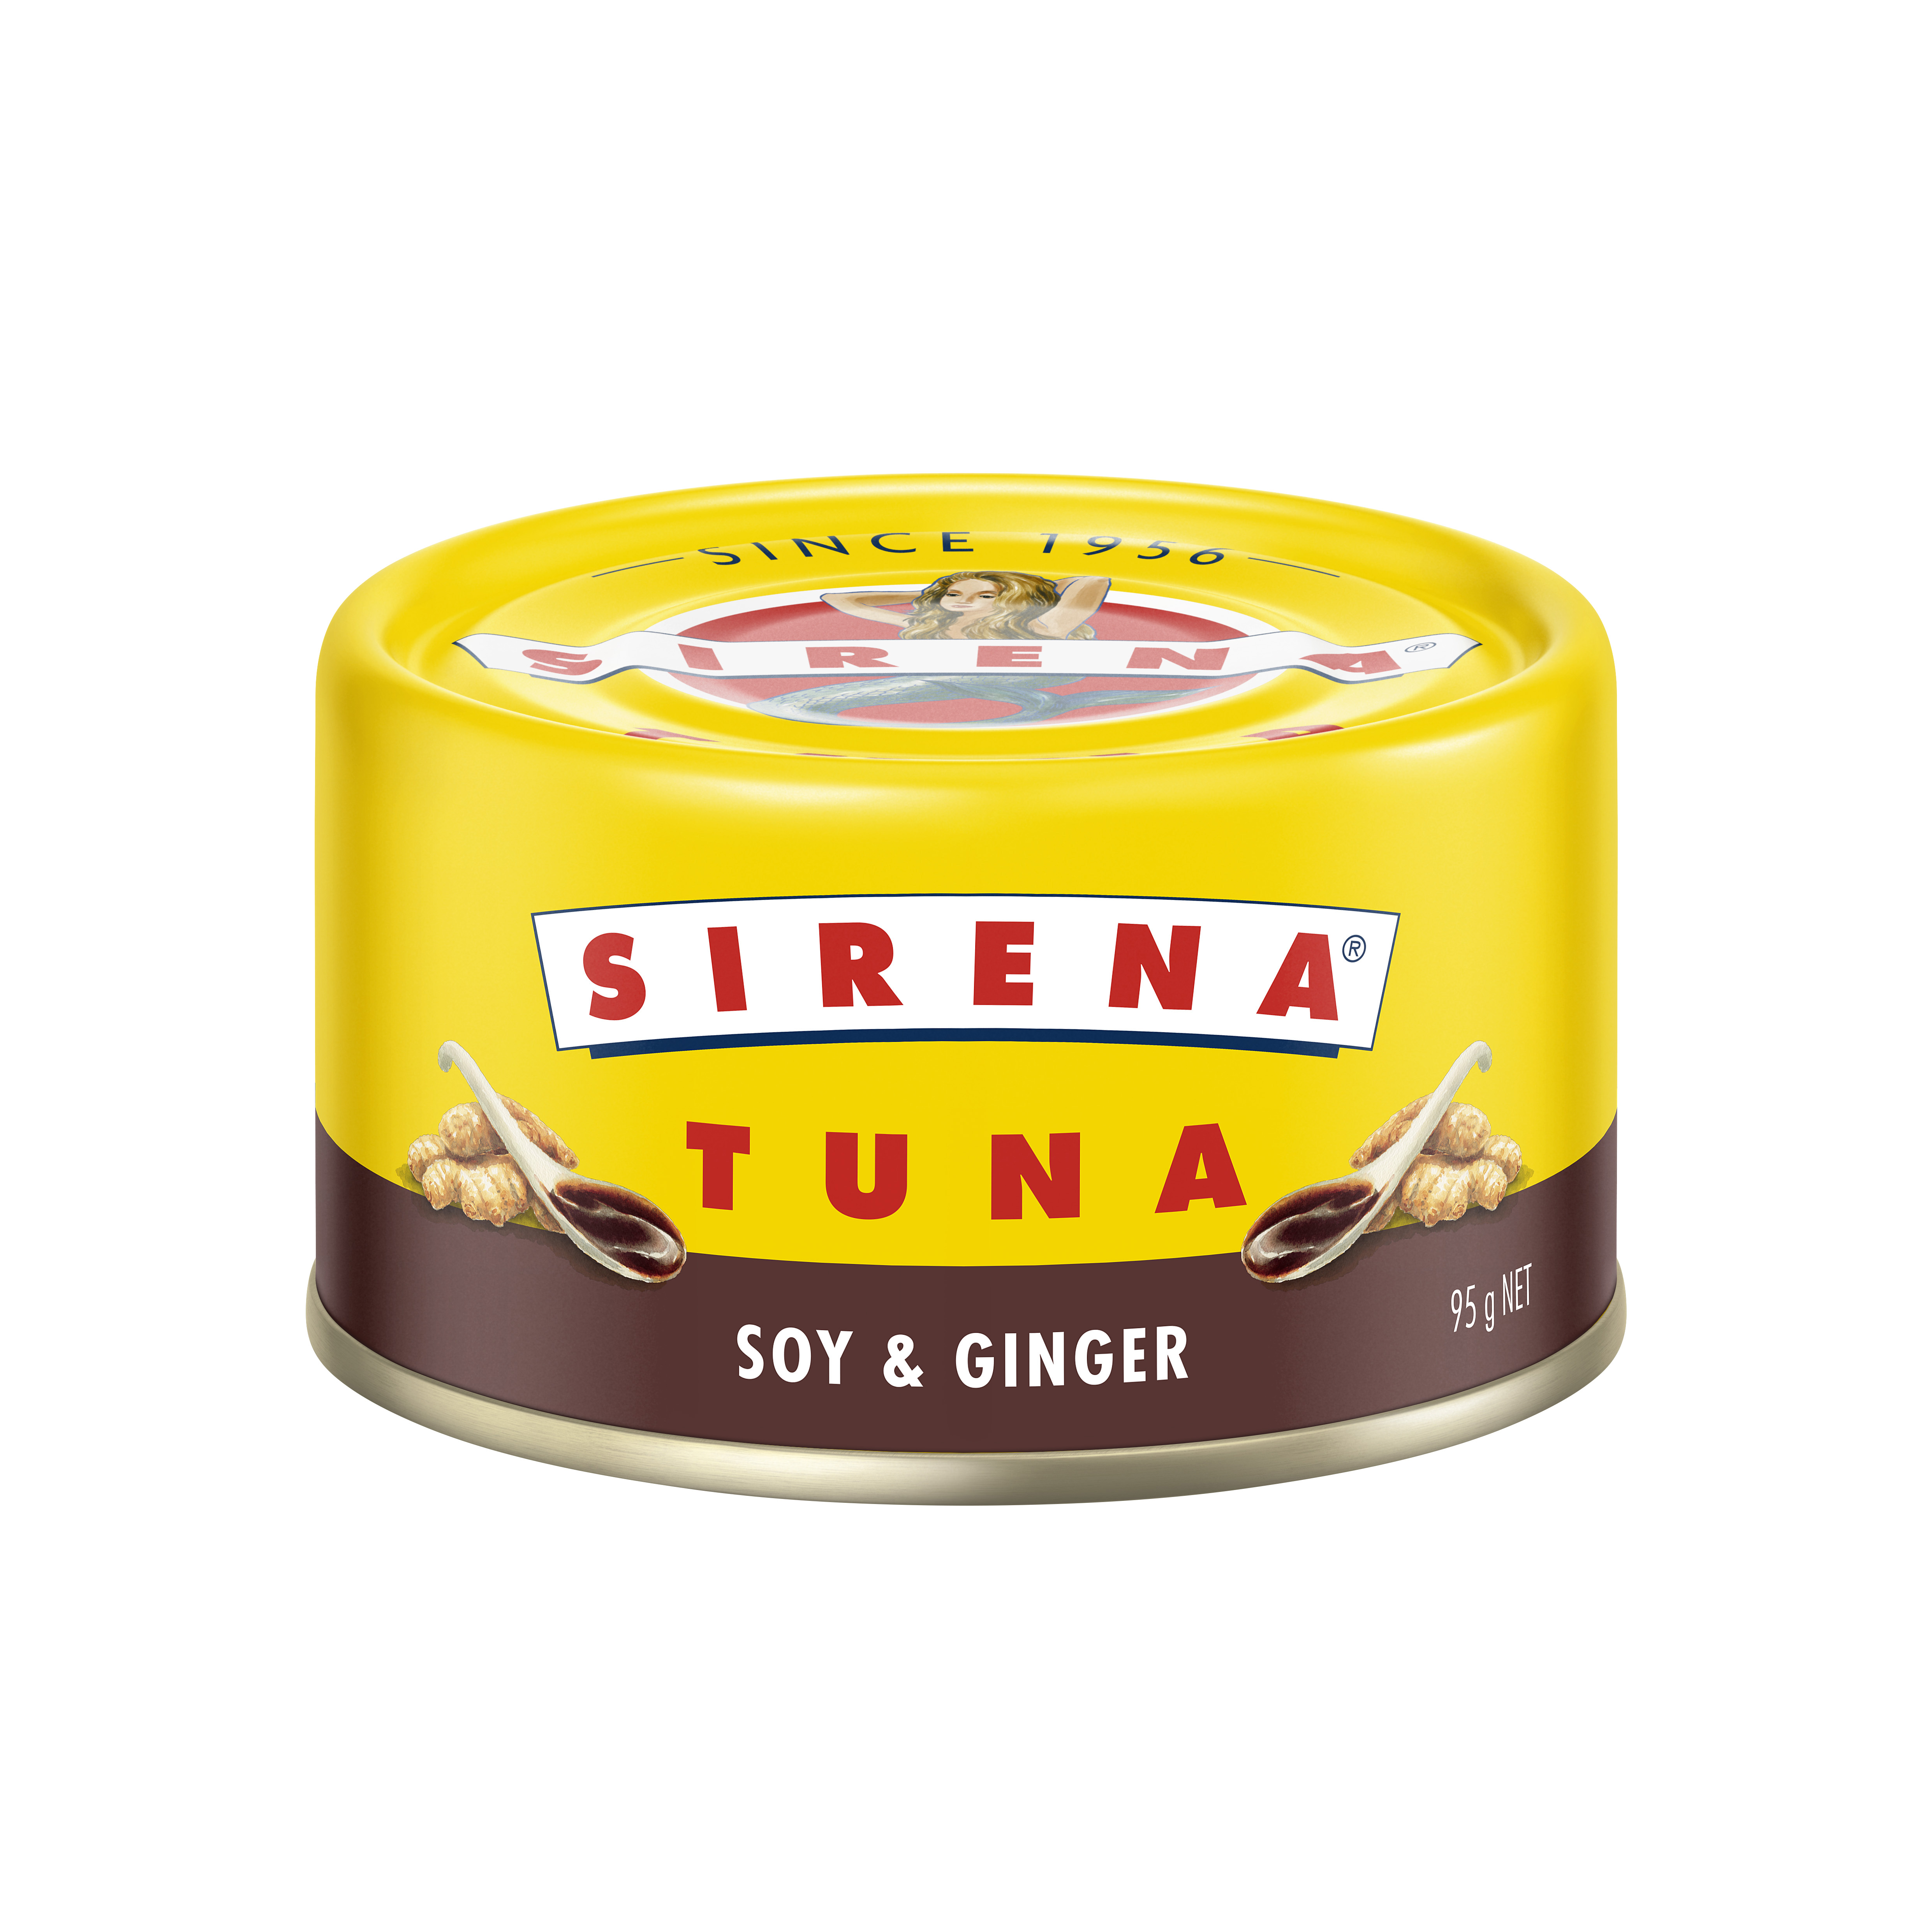 Sirena Tuna Soy & Ginger can image